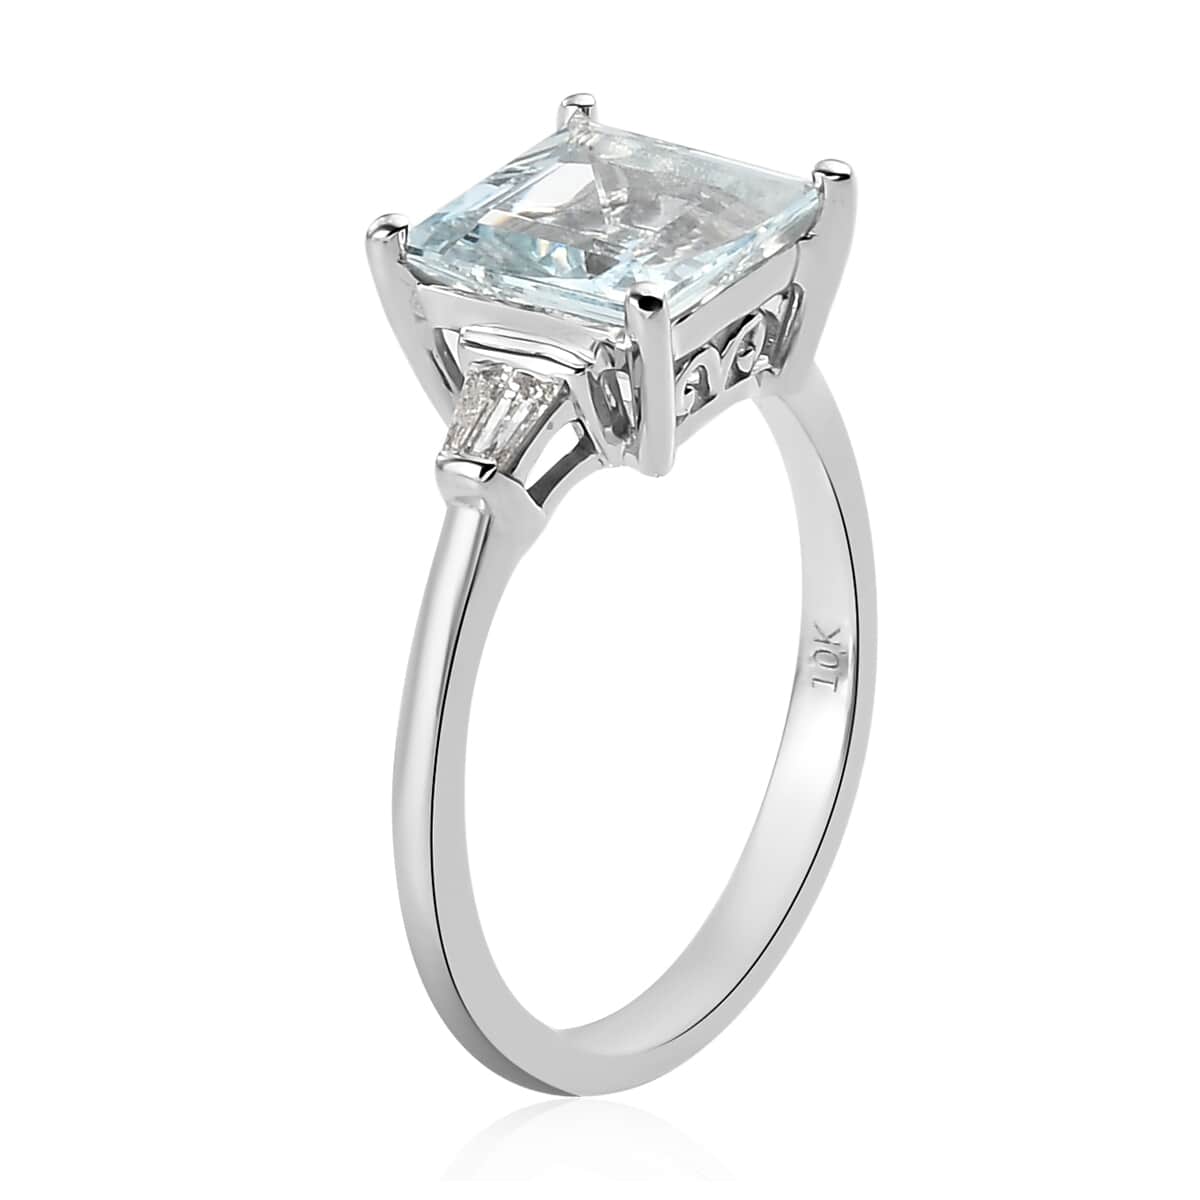 Luxoro 10K White Gold Premium Espirito Santo Aquamarine and Diamond Ring (Size 9.0) 2.65 Grams 2.25 ctw image number 3